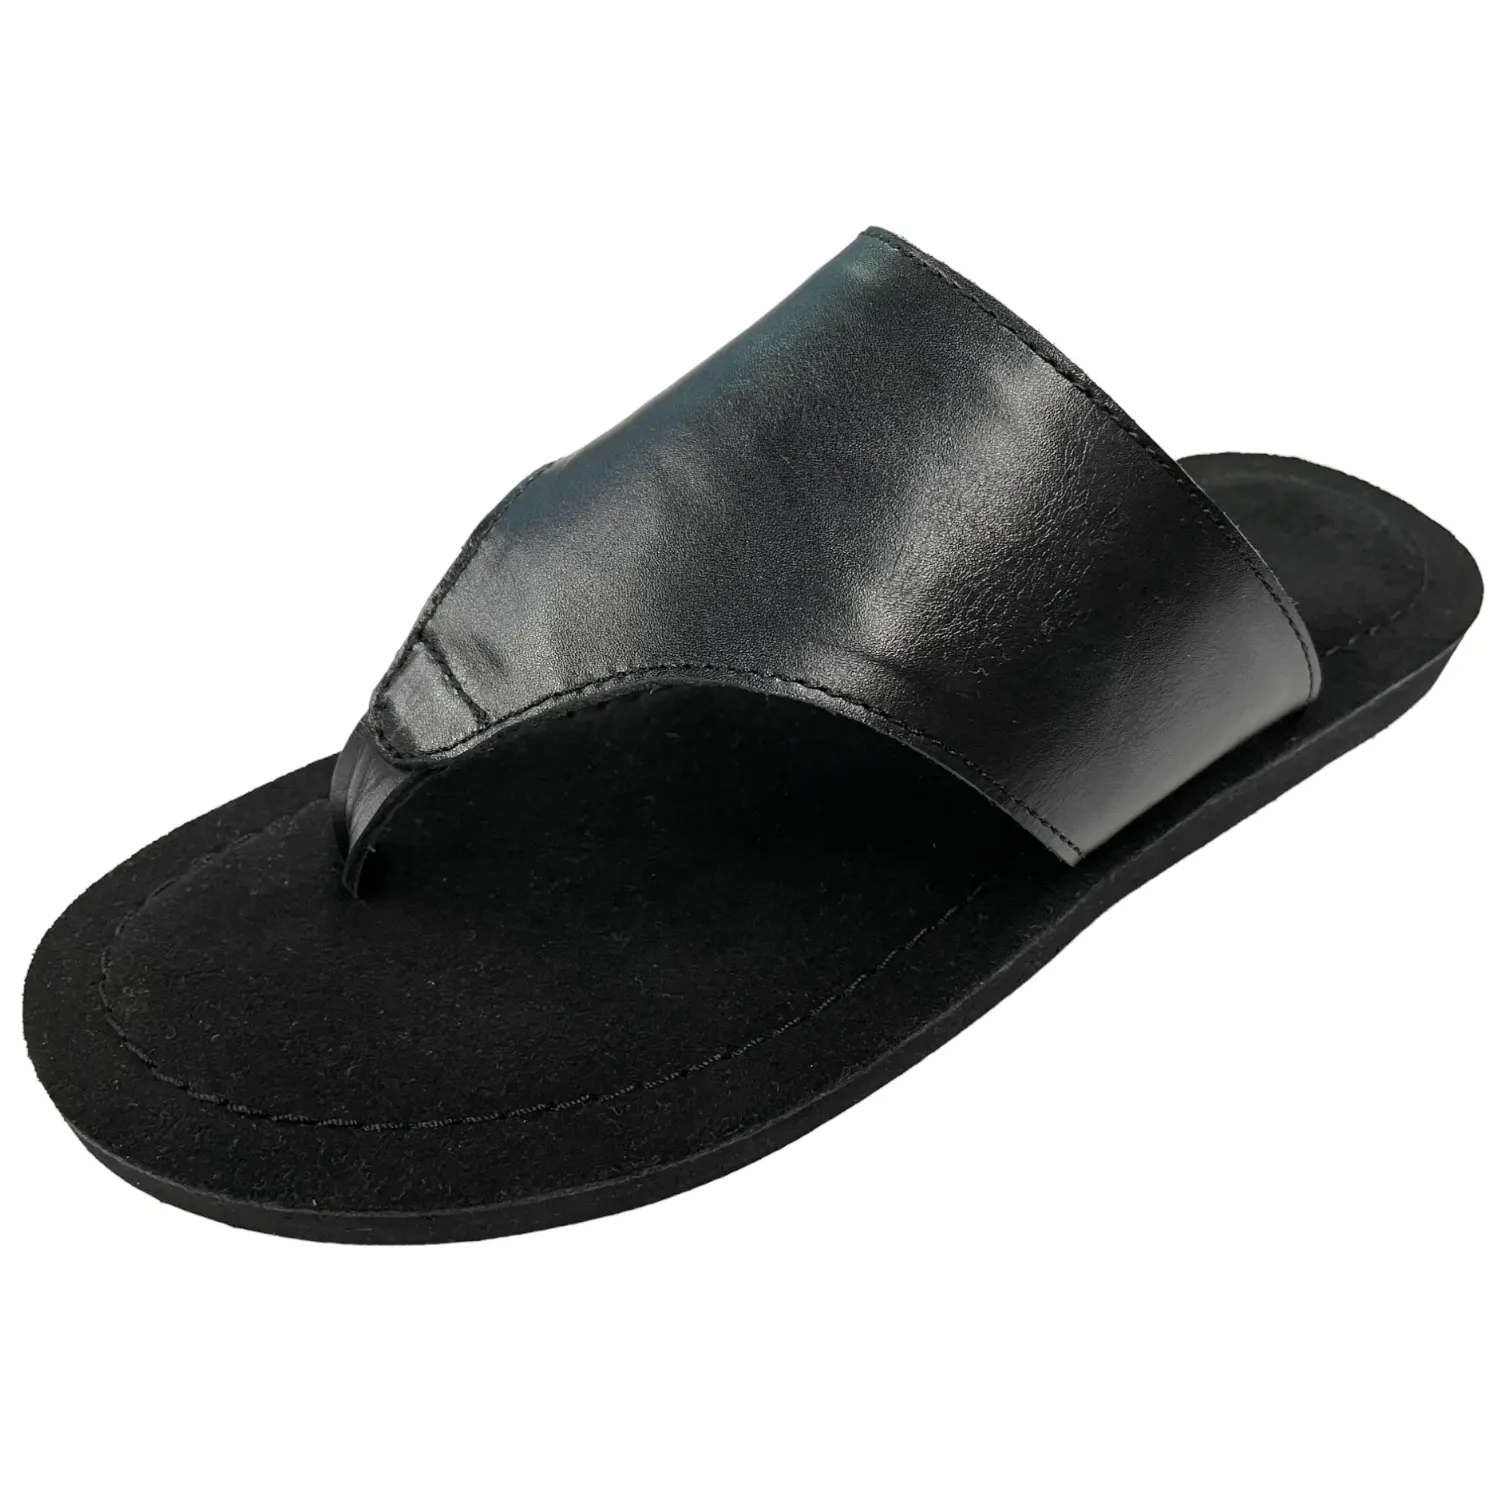 Mens Black Leather Slipper For Men Gents Boys Soft High Quality Thong Slipper 100% Leather Walking Style Dailywear Slipper